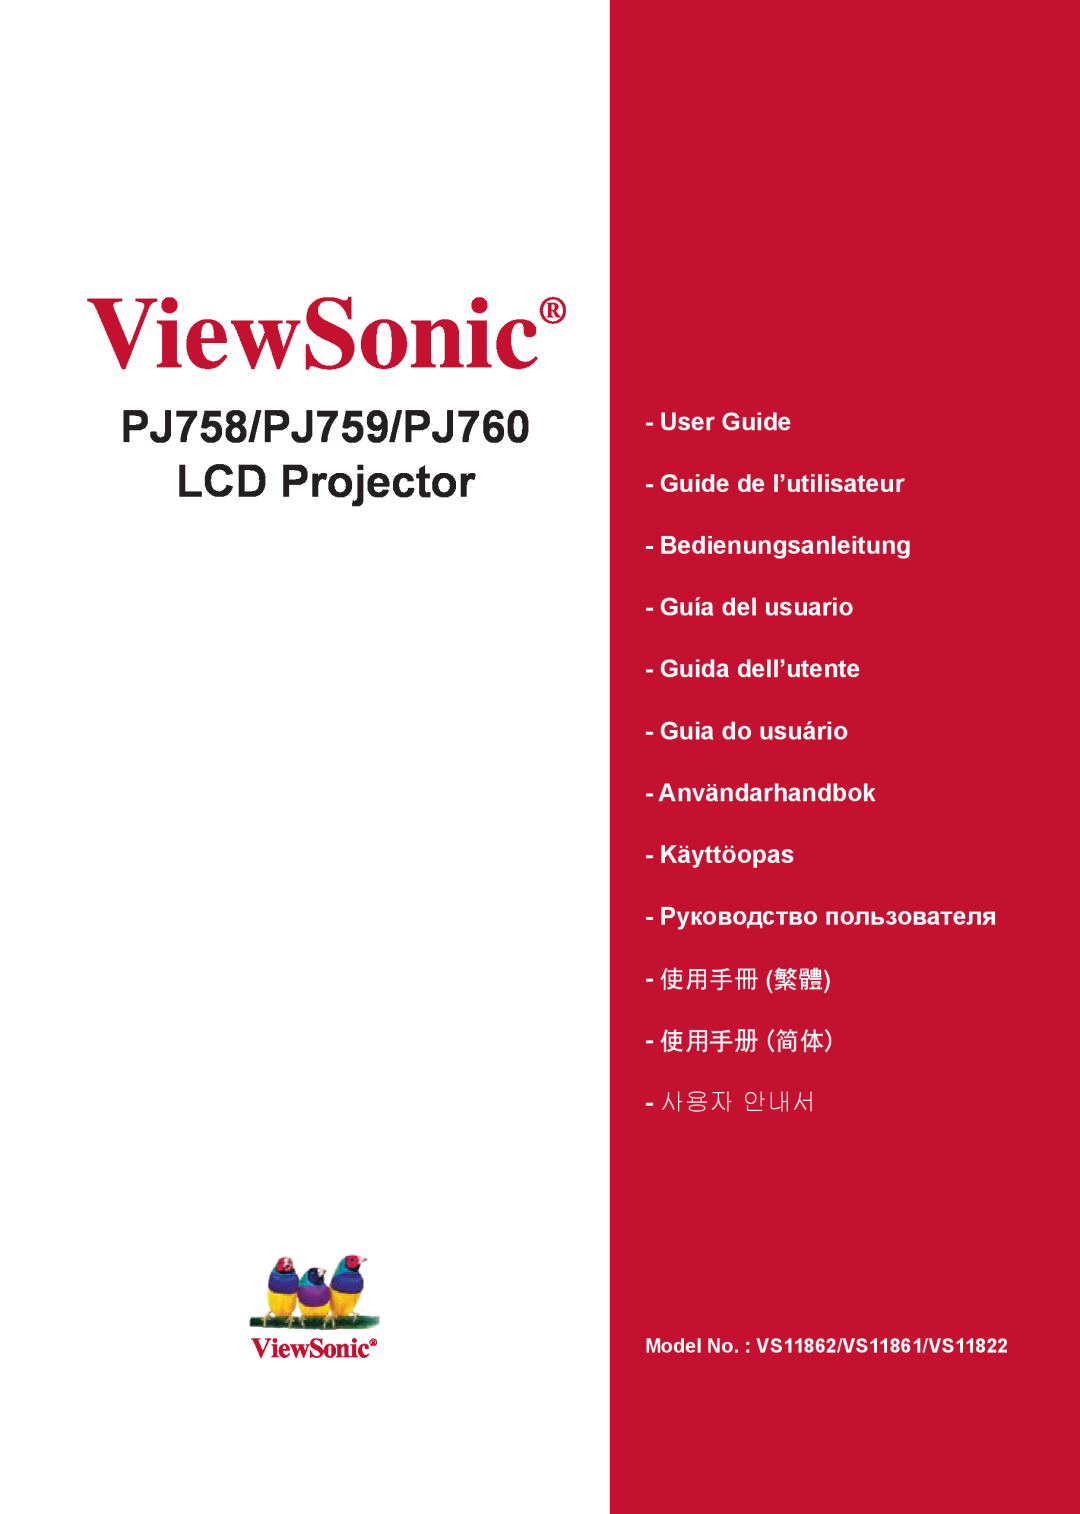 ViewSonic manual PJ758/PJ759/PJ760 LCD Projector, ViewSonic, User Guide Guide de l’utilisateur, 使用手冊 繁體 使用手冊 簡體 